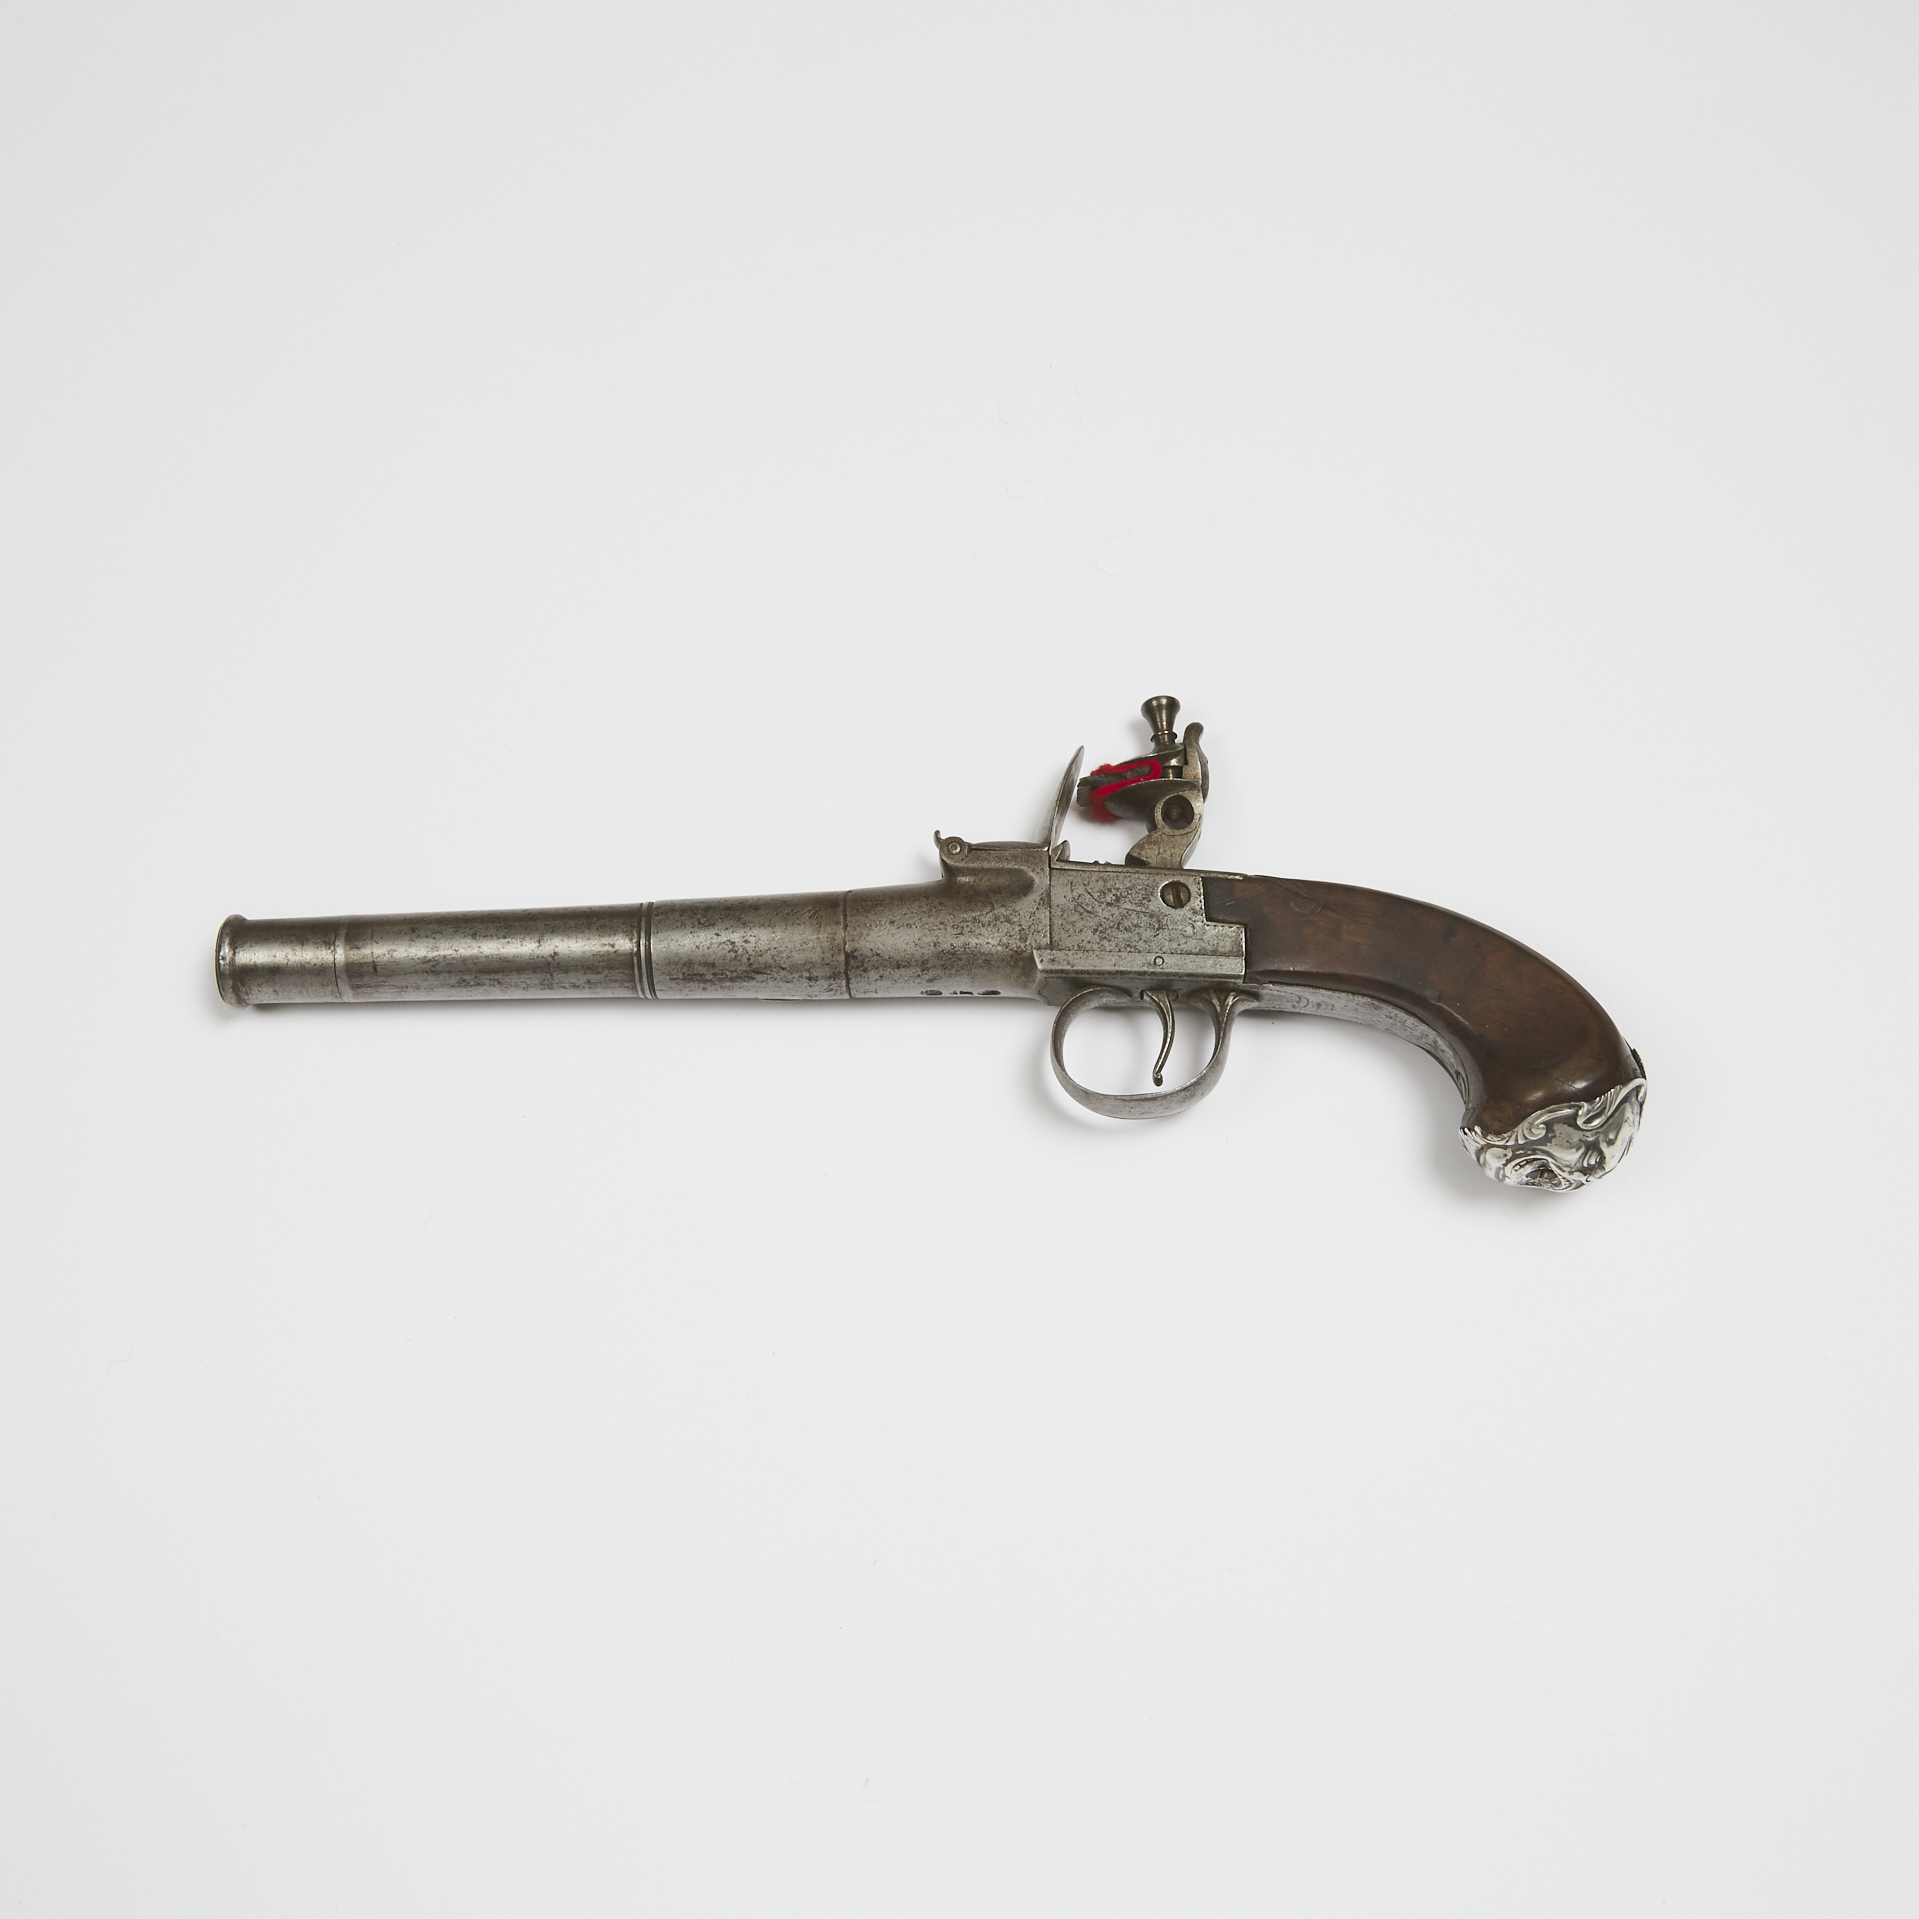 British Flint-Boxlock Pistol, Edward Newton, Grantham, early 19th century